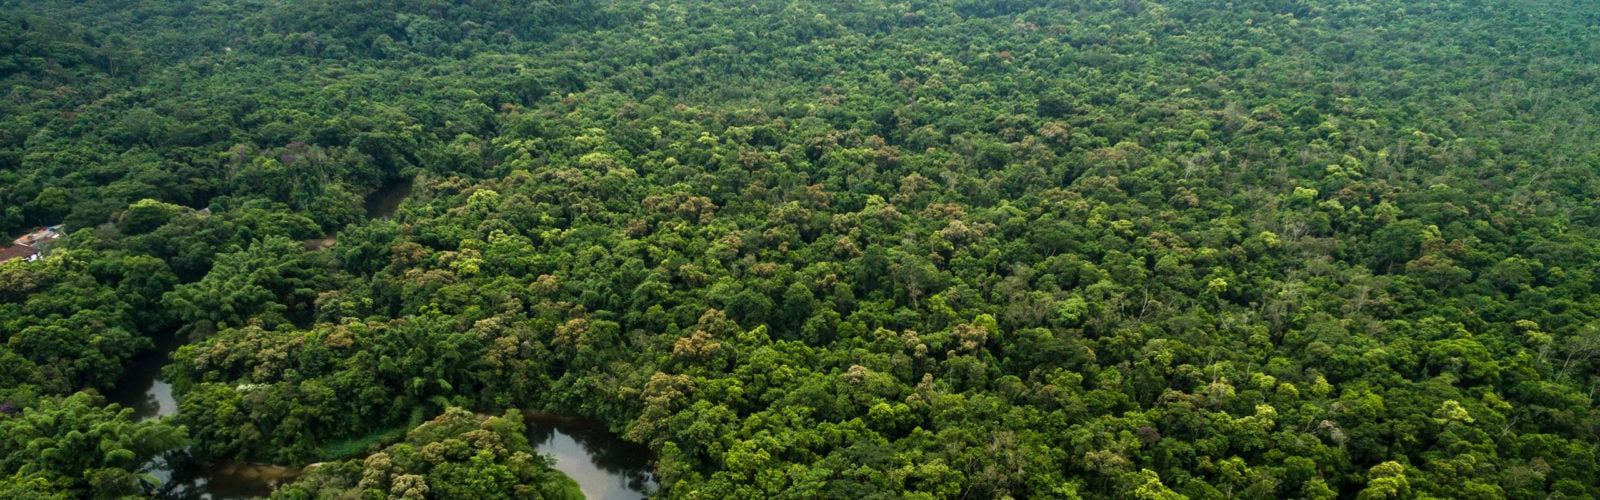 brazil-amazon An aerial view of the Amazon